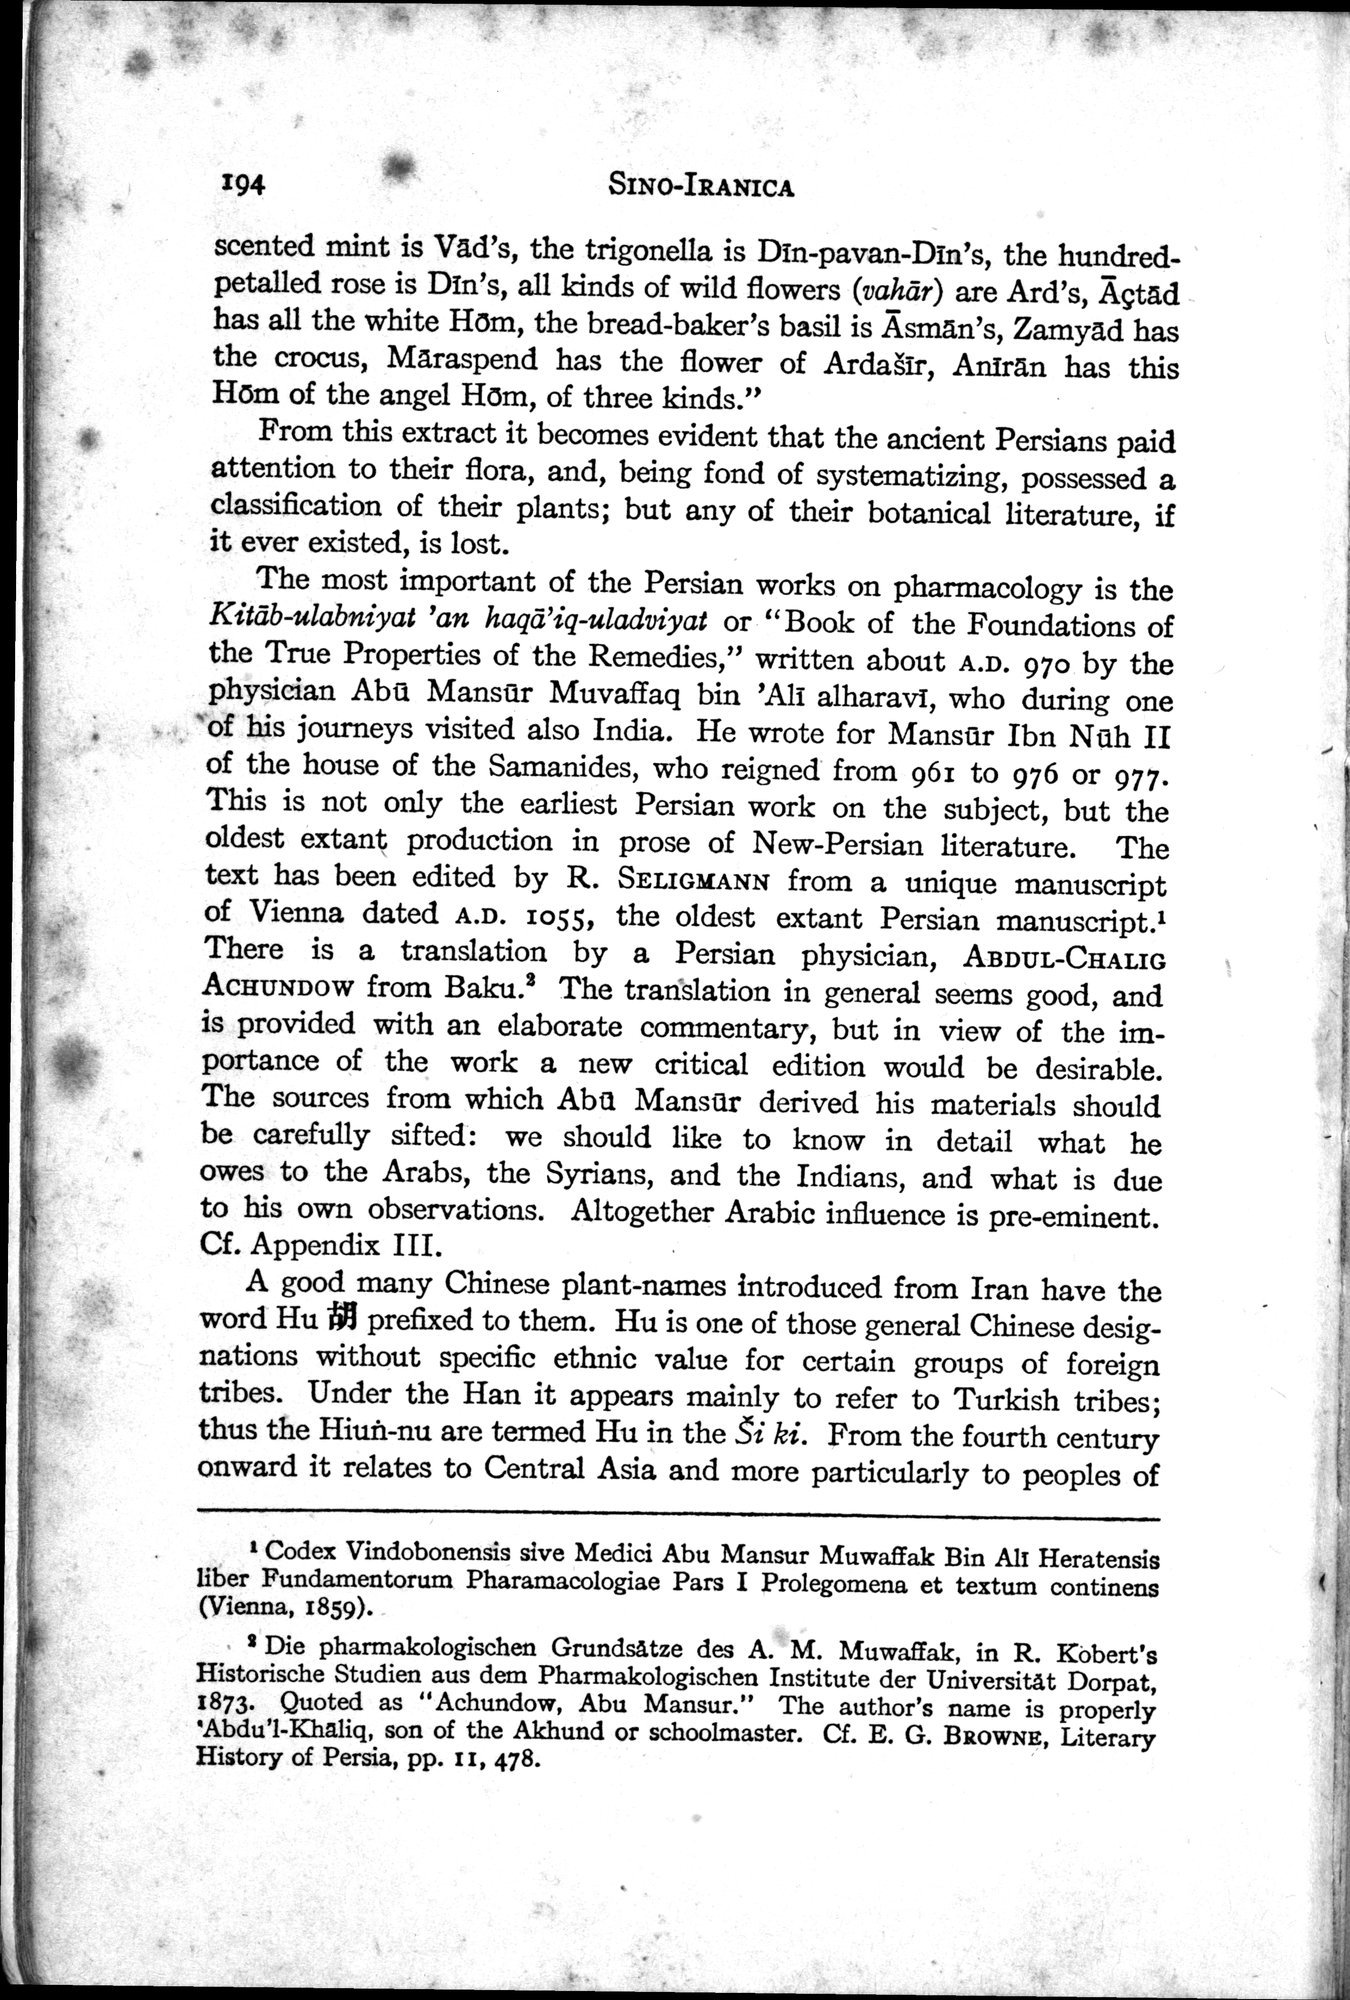 Sino-Iranica : vol.1 / Page 20 (Grayscale High Resolution Image)